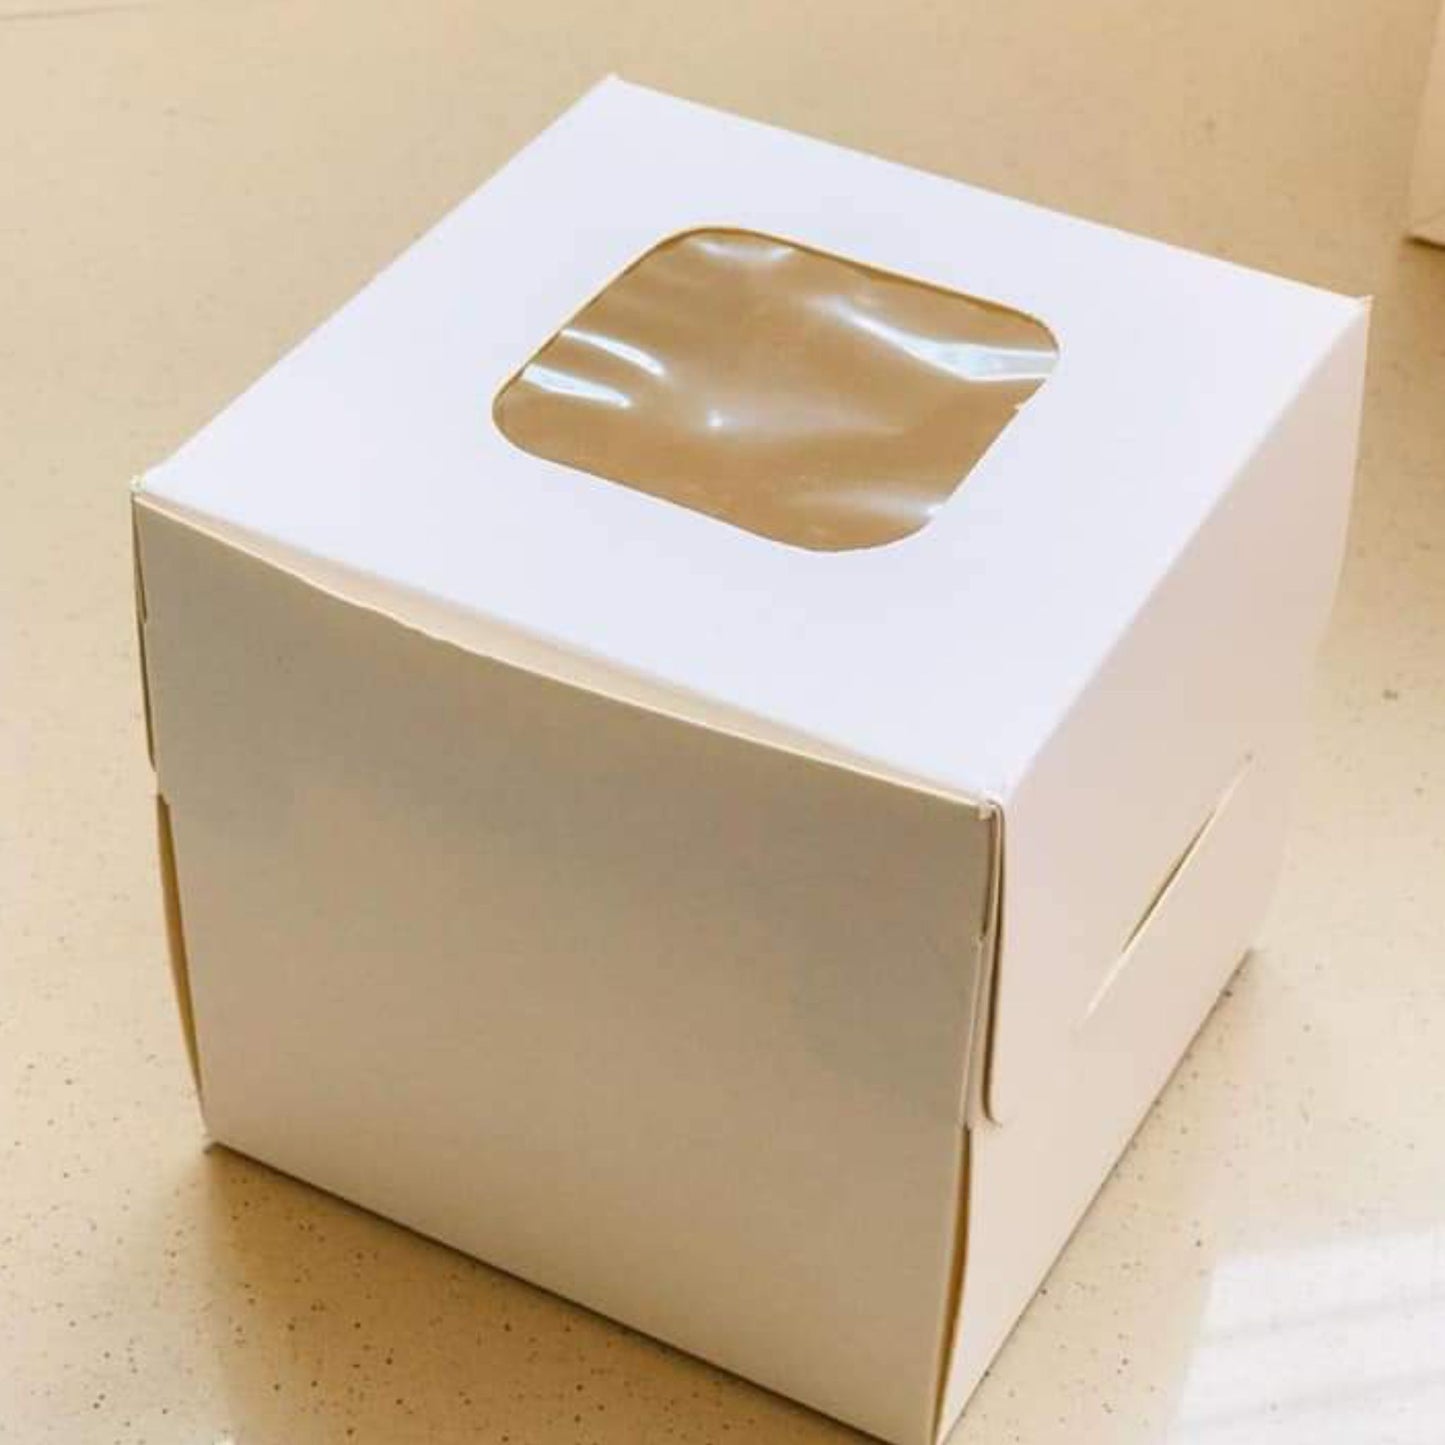 4x4x4 inch Cake Box